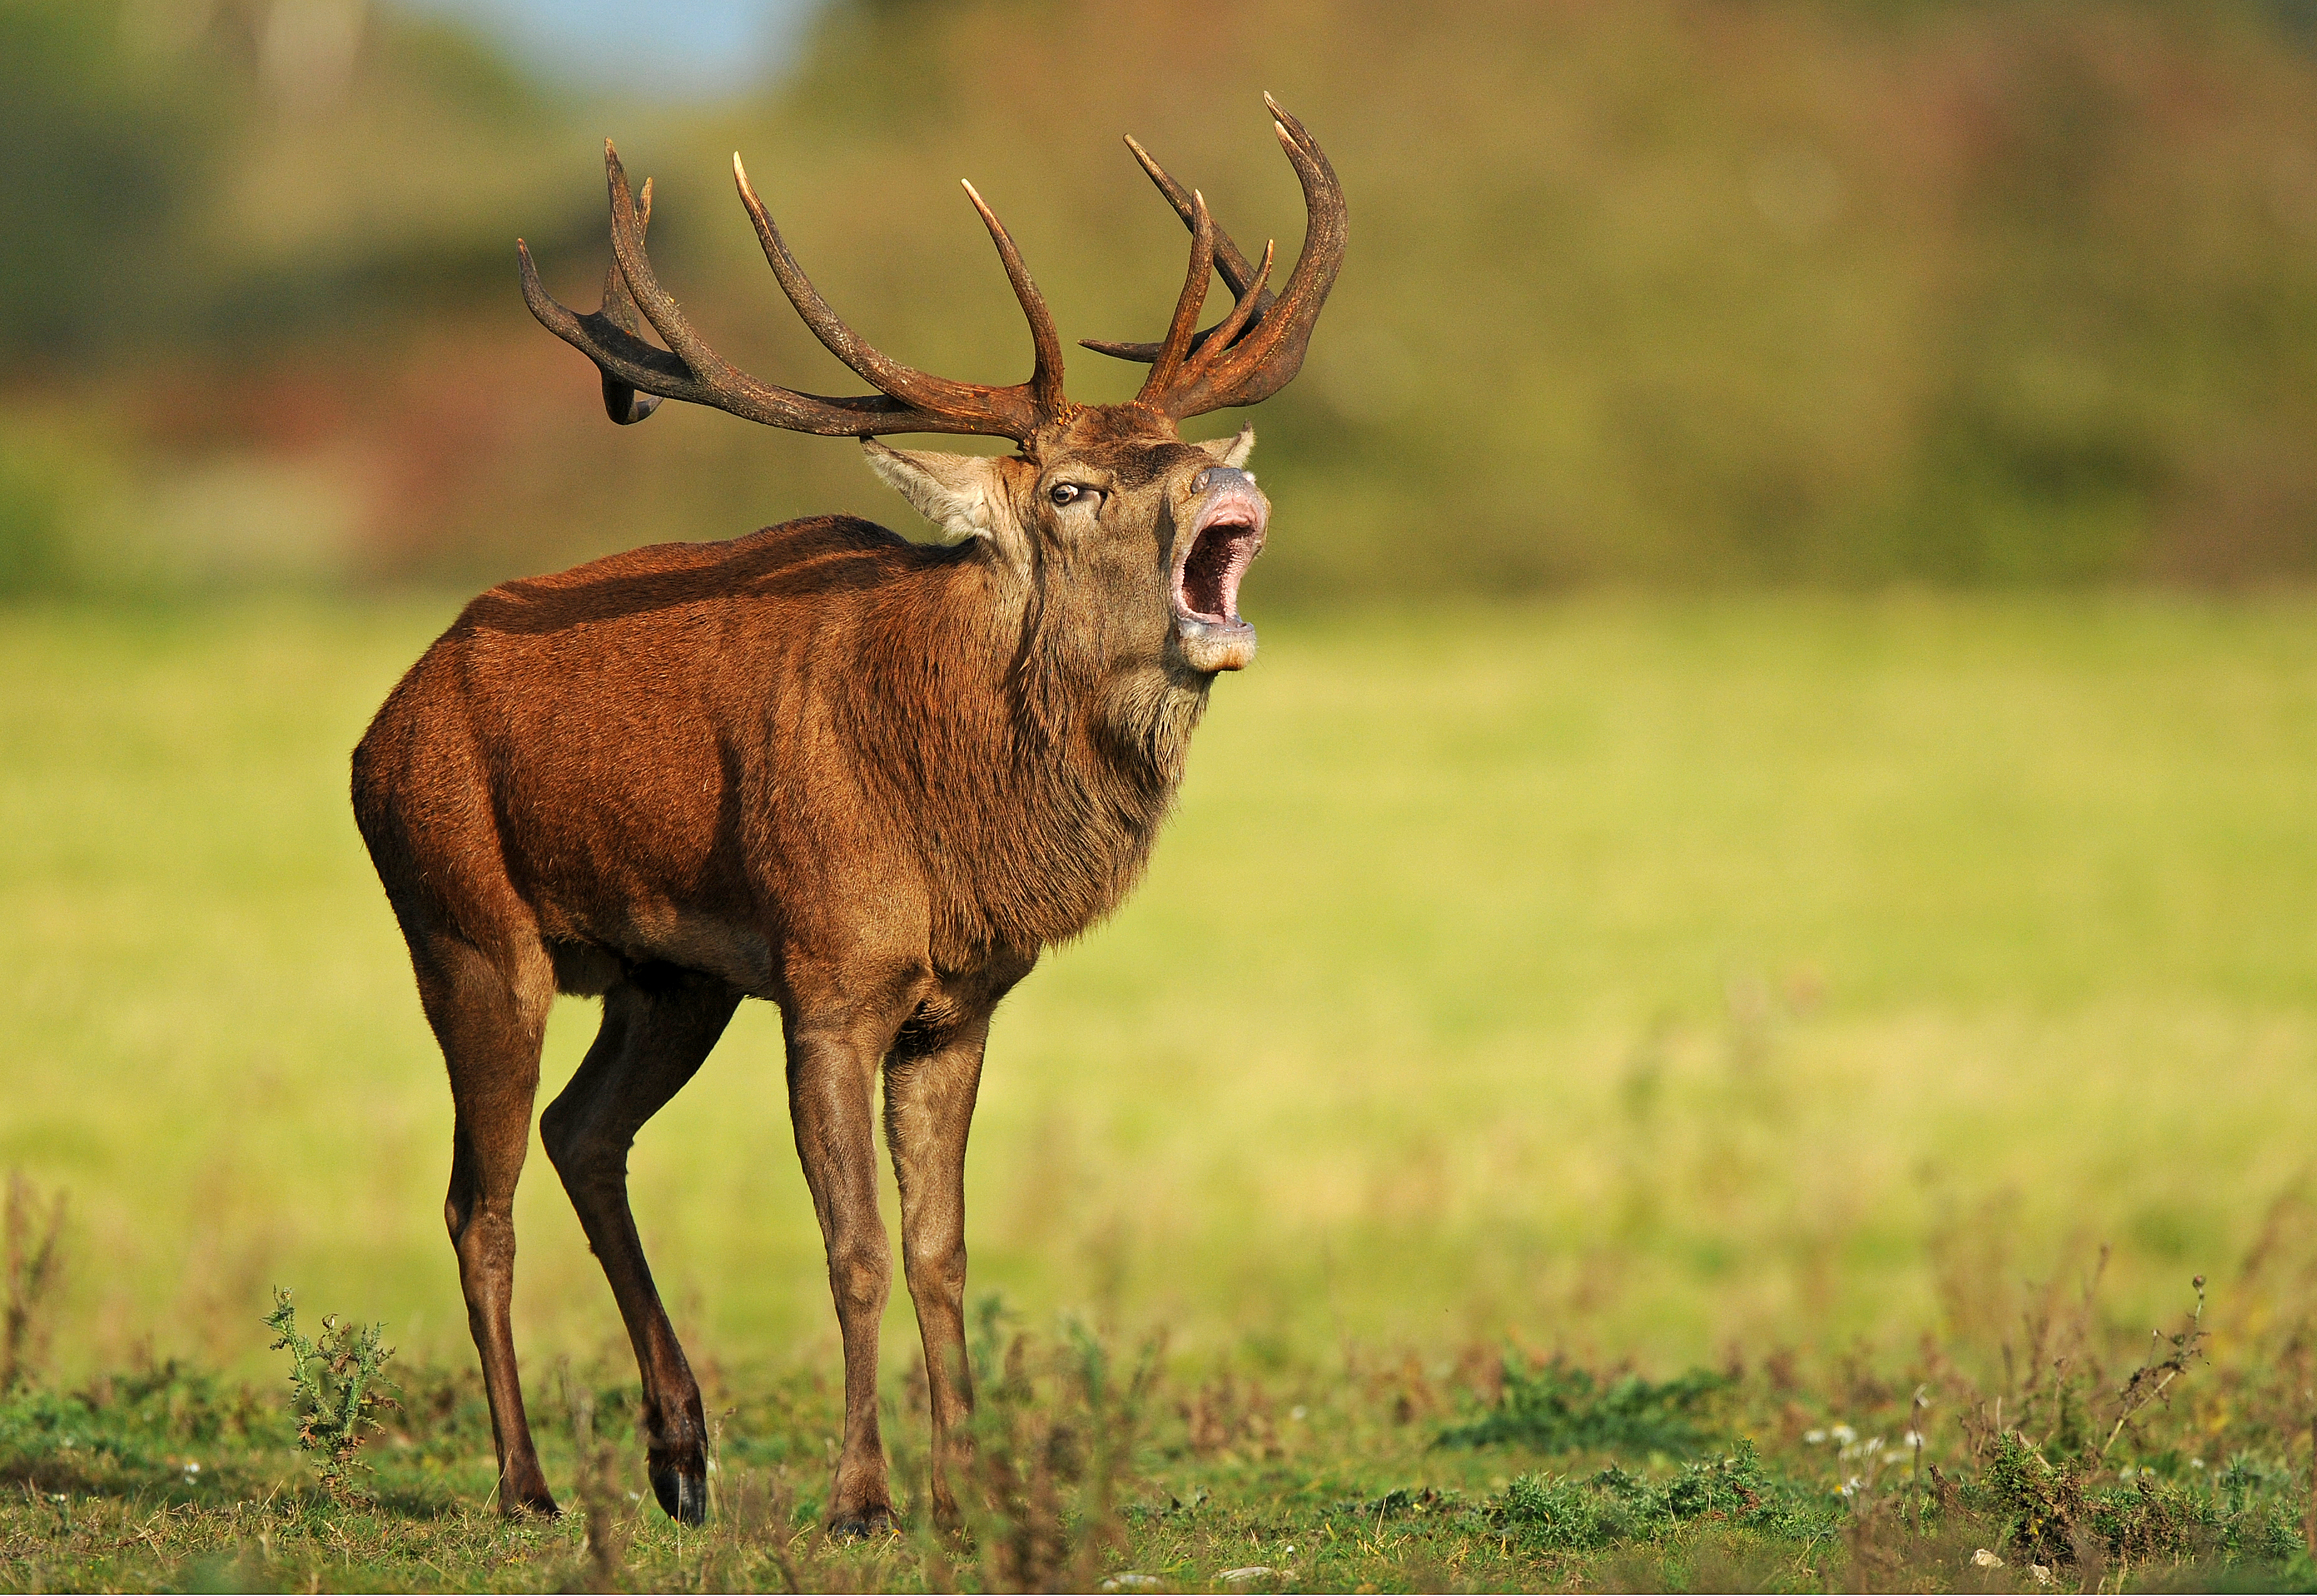 Hot off the press: red deer safaris added - Minsmere - Minsmere ...